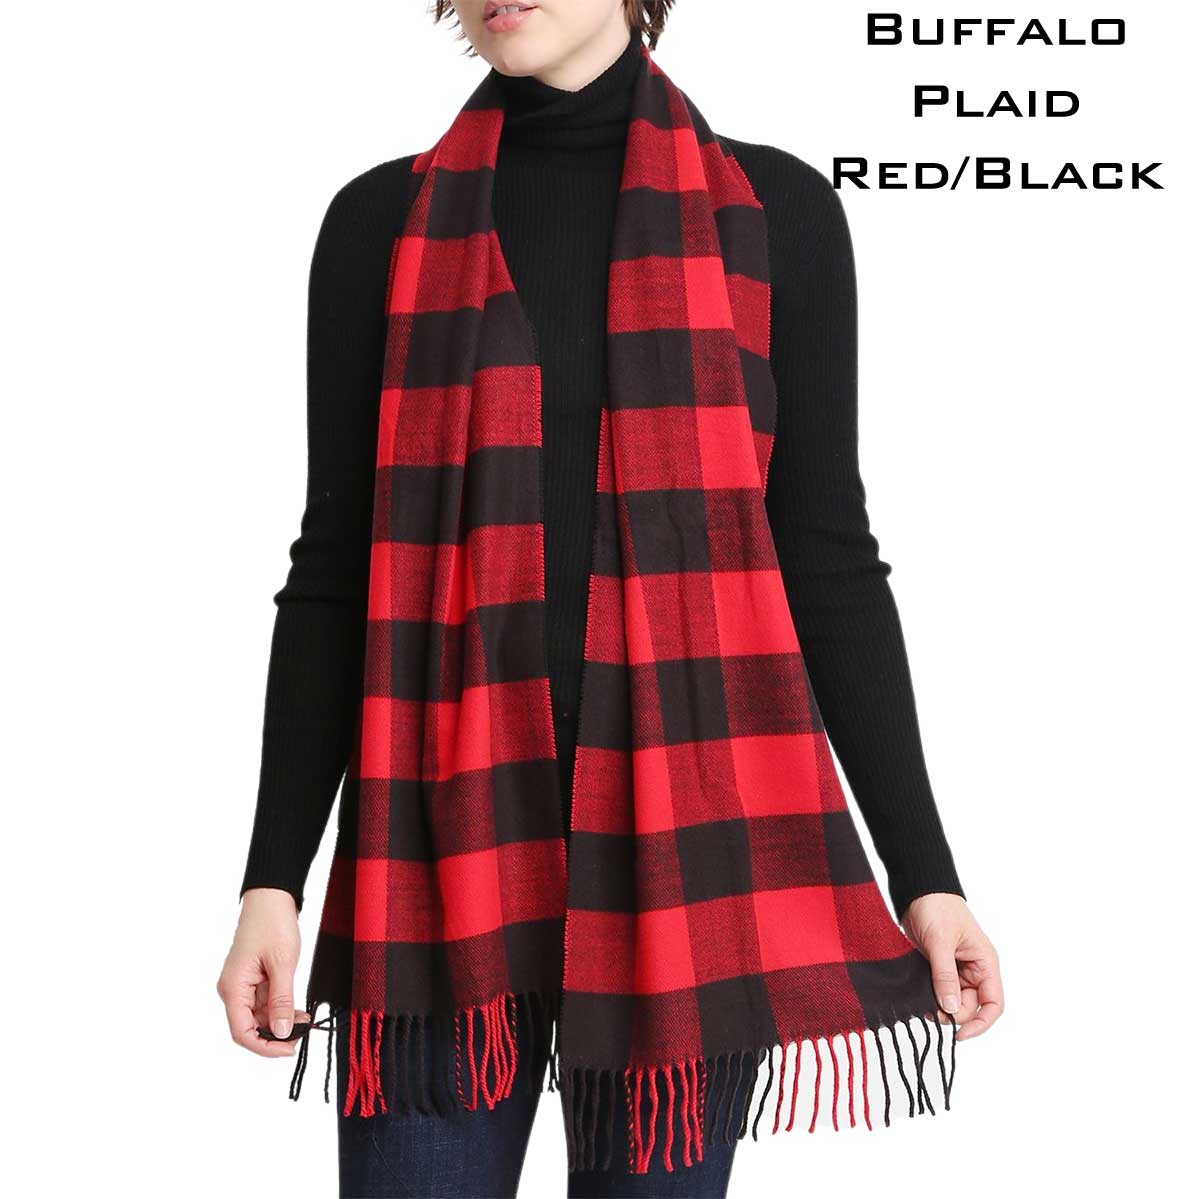 1337 - Black/Red<br>
Buffalo Plaid<br> 
Cashmere Feel Scarf 